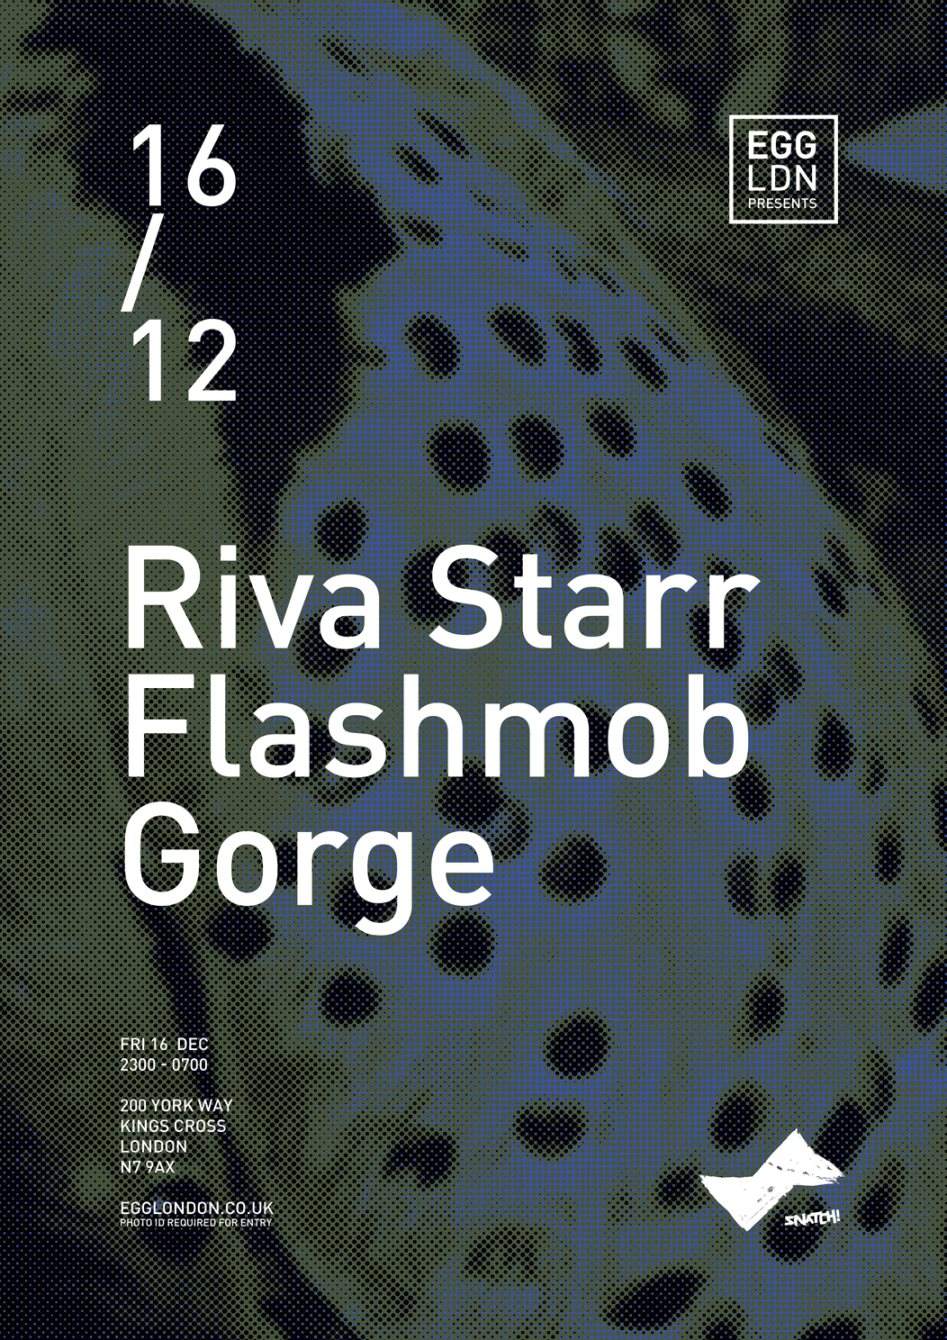 Egg presents: Riva Starr, Flashmob & Gorge - Página frontal